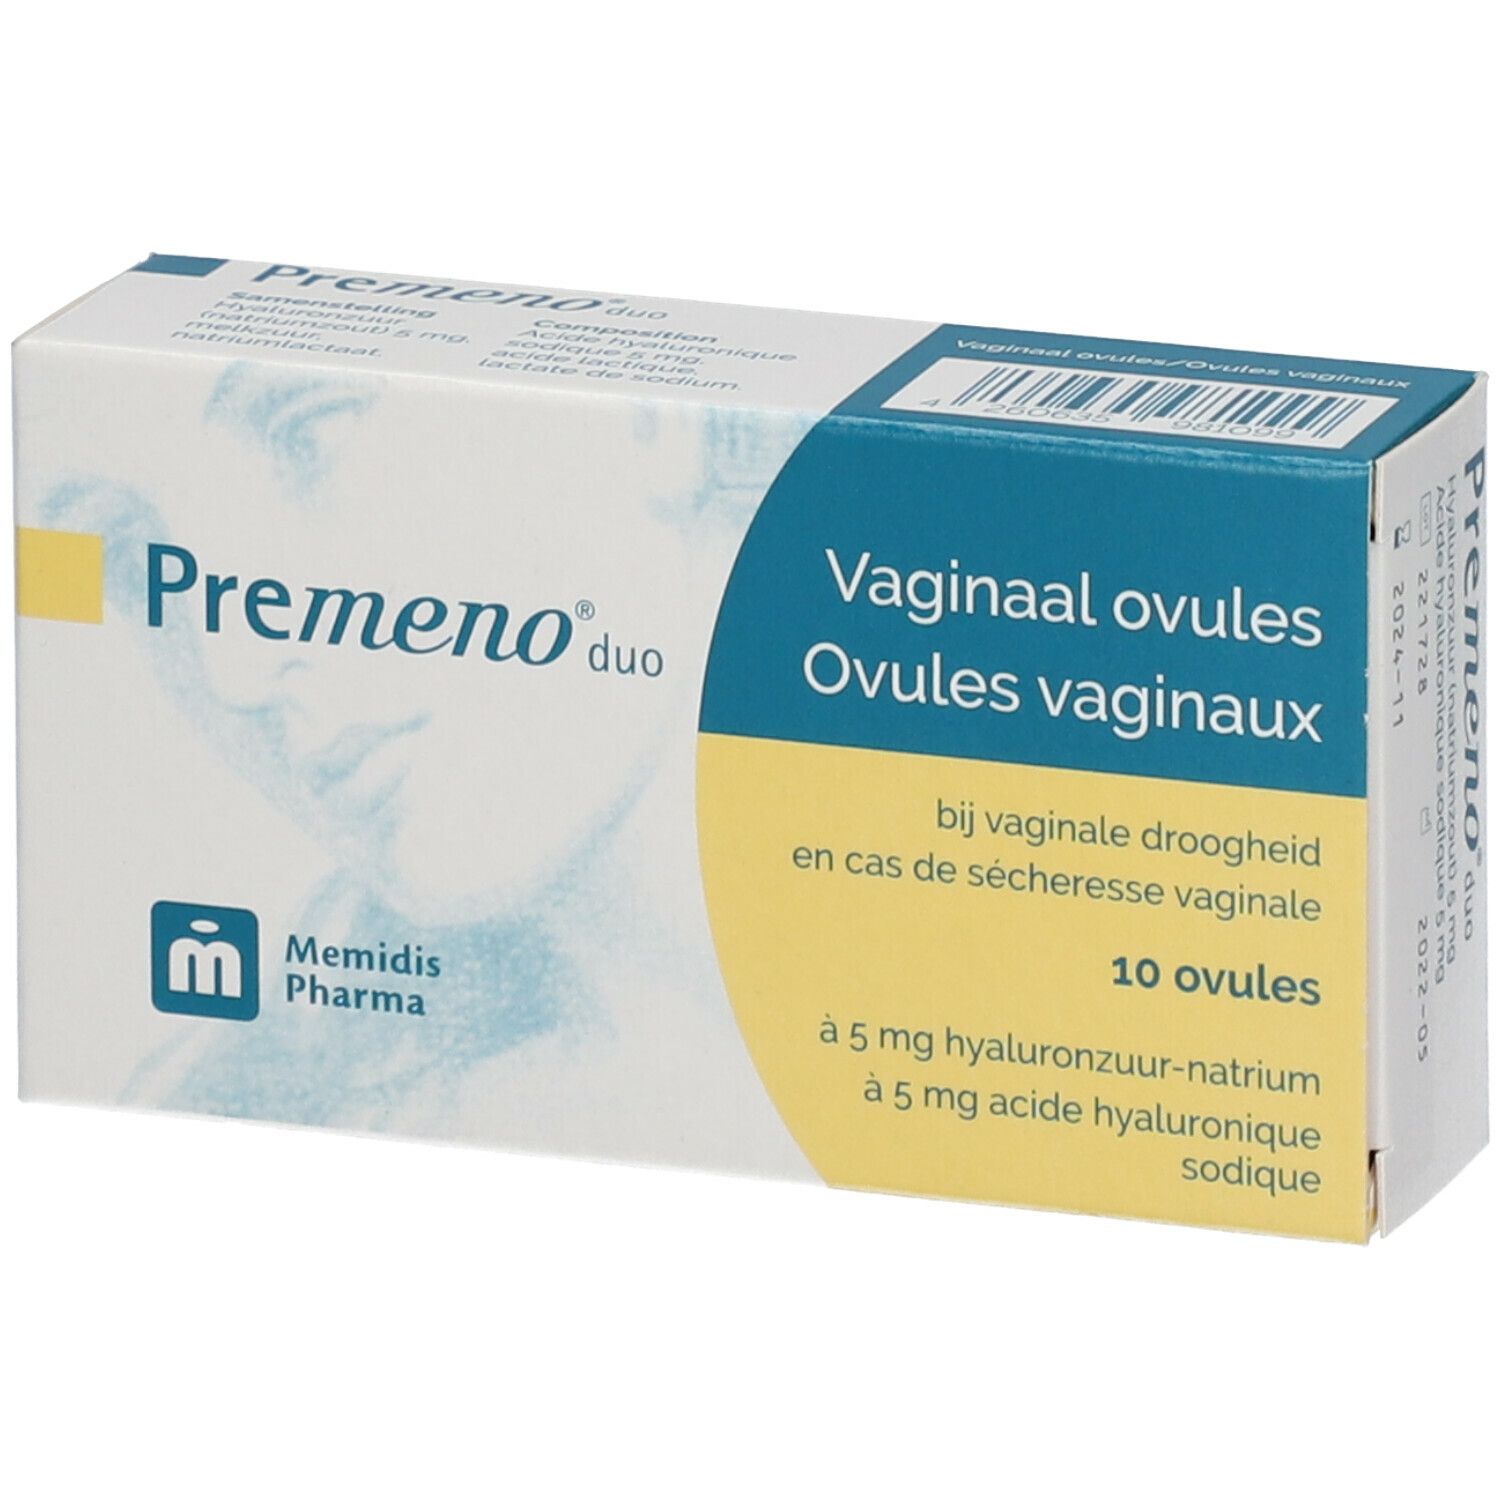 Premeno® duo ovules vaginaux